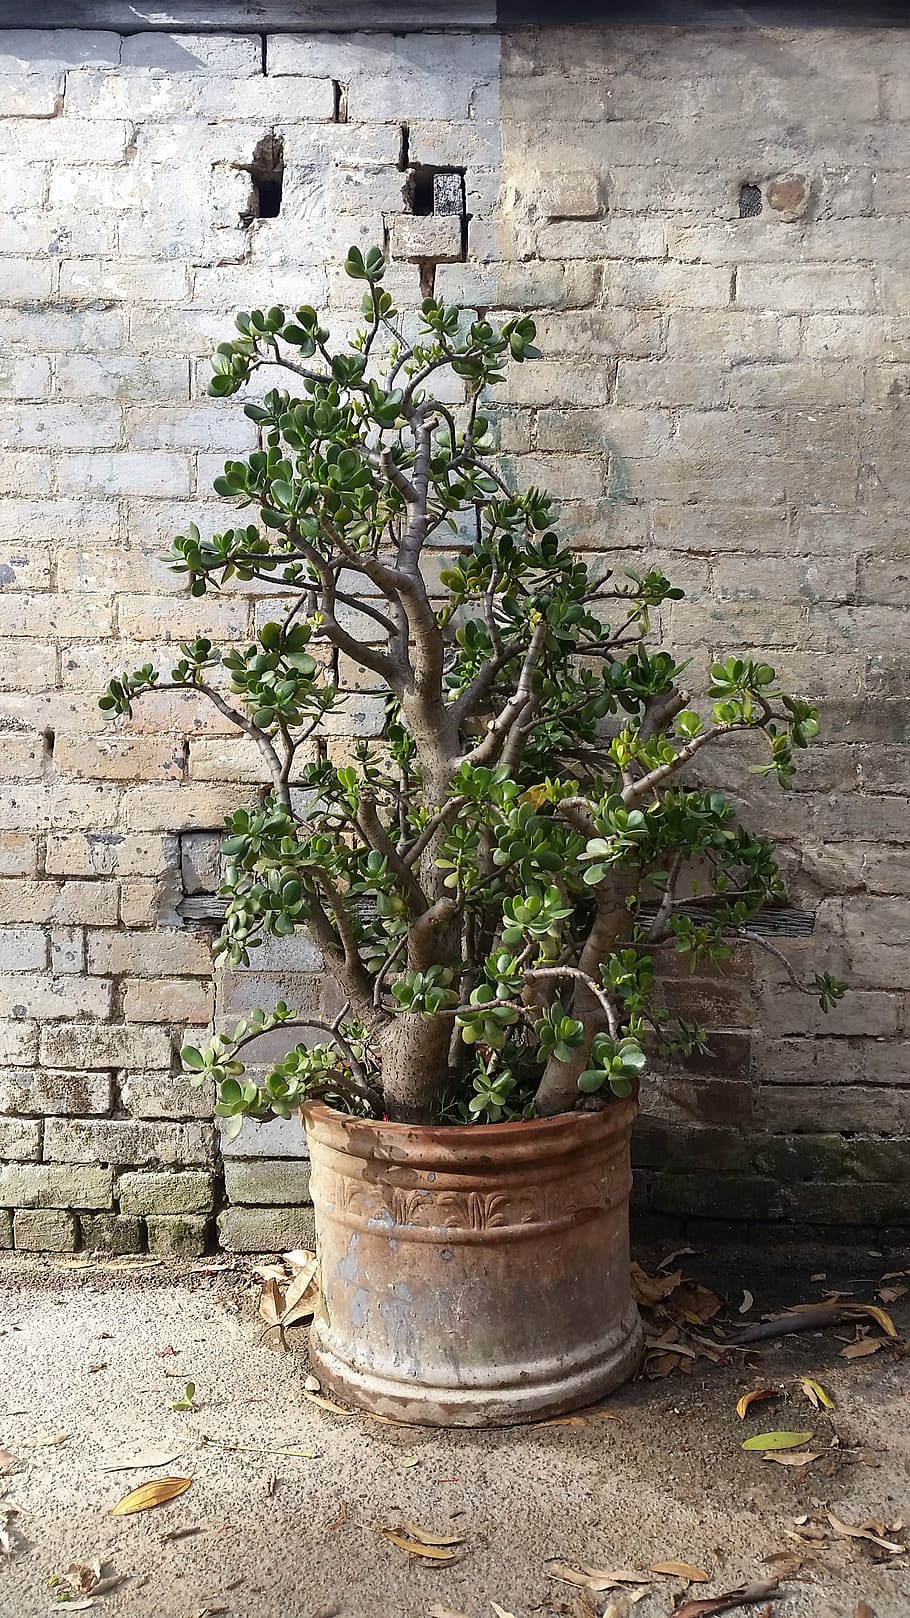 crassula ovata, potted plant, money tree, succulent, rustic, wall, brick, plant, terracotta, lane